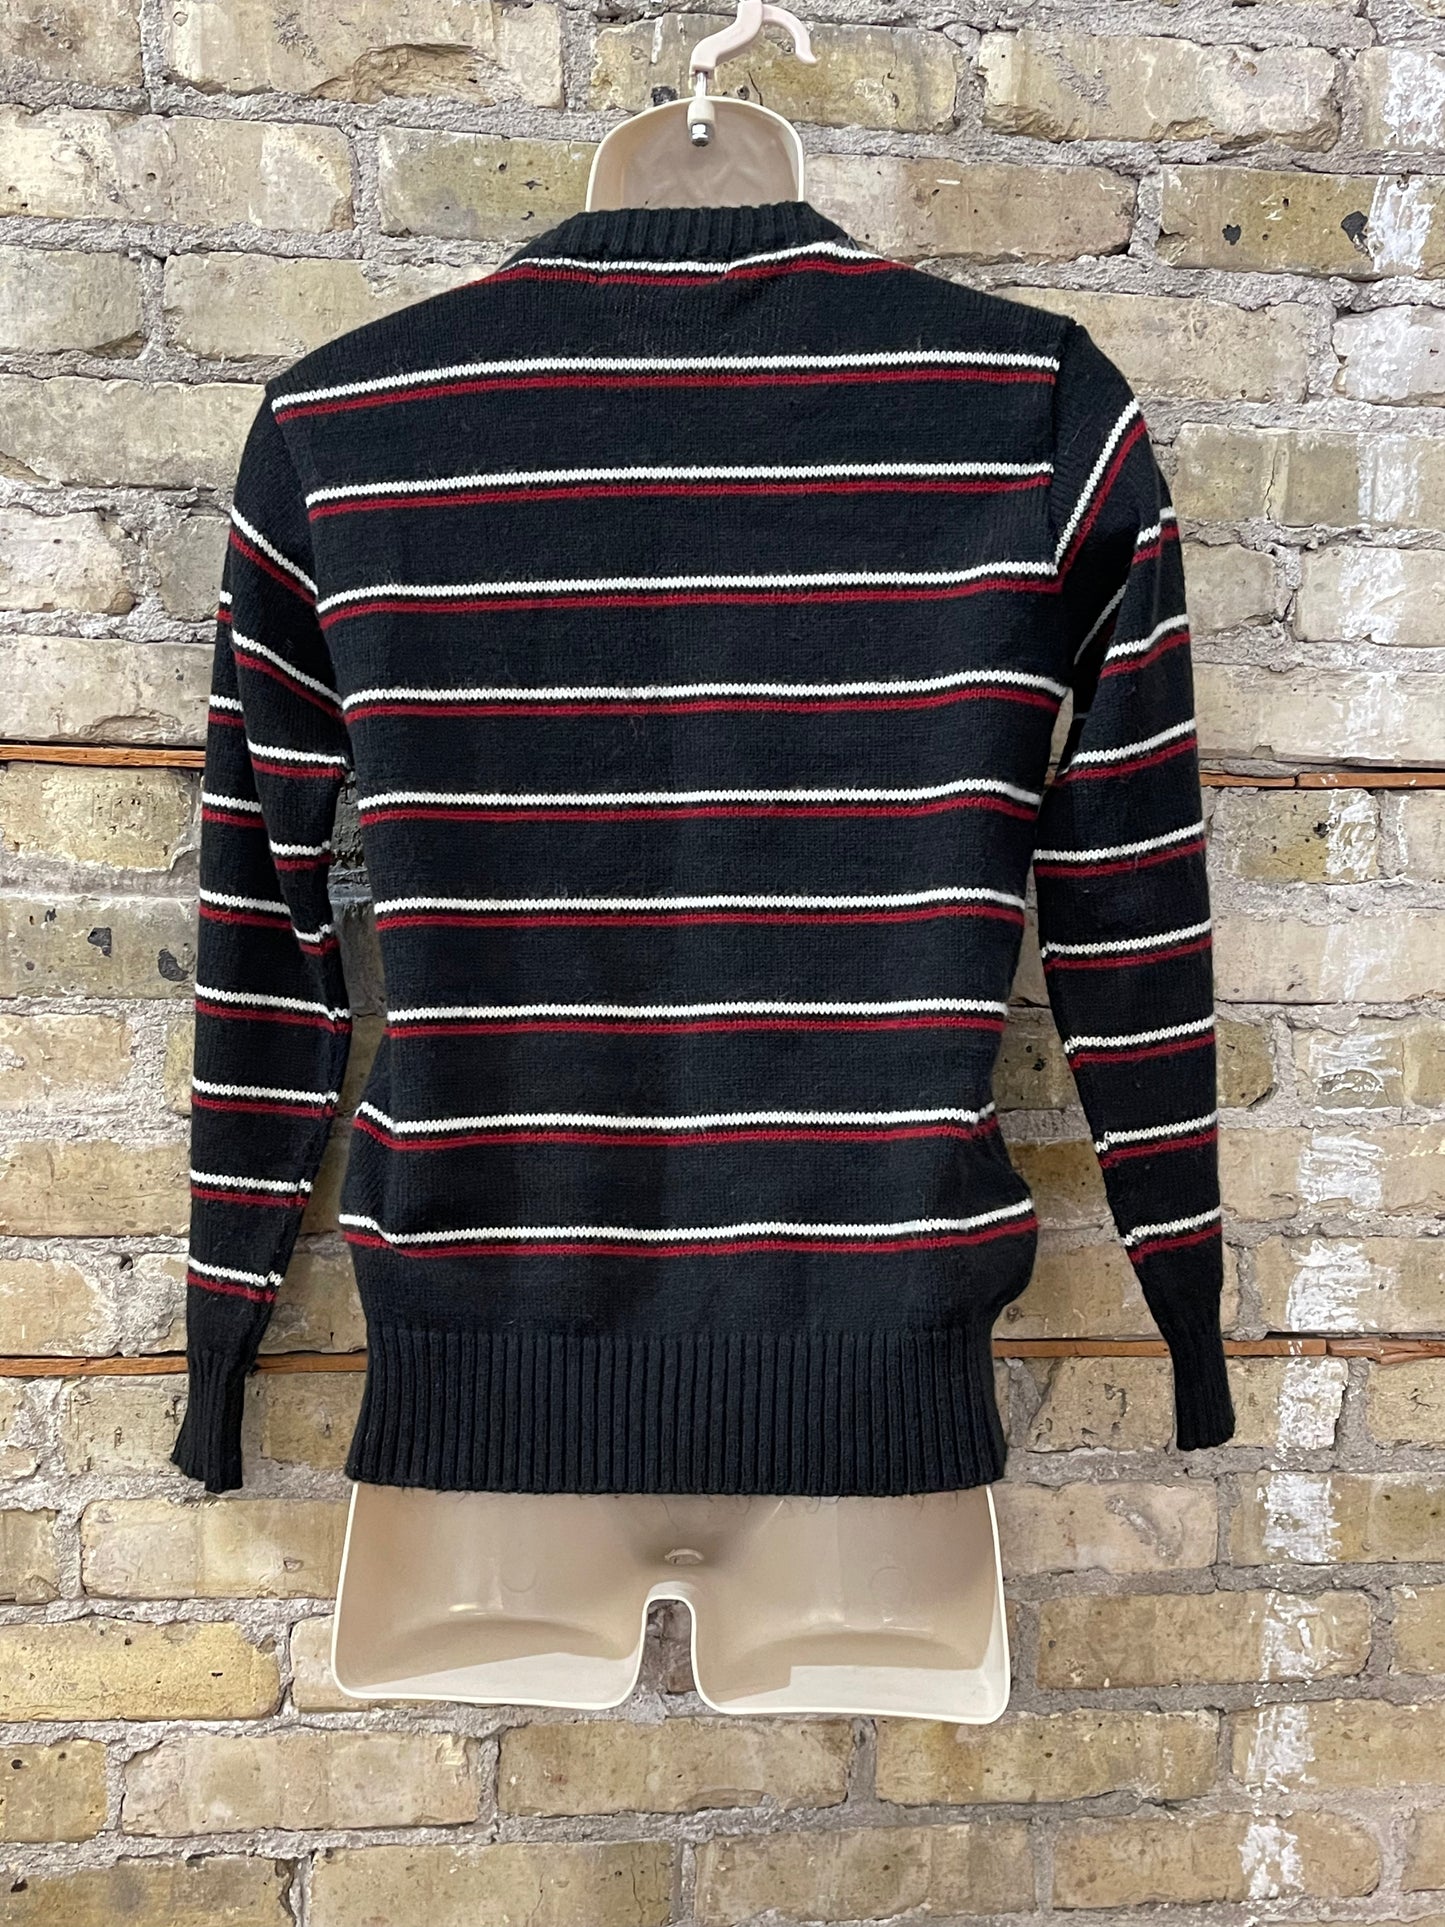 Townsley Black Striped Sweater